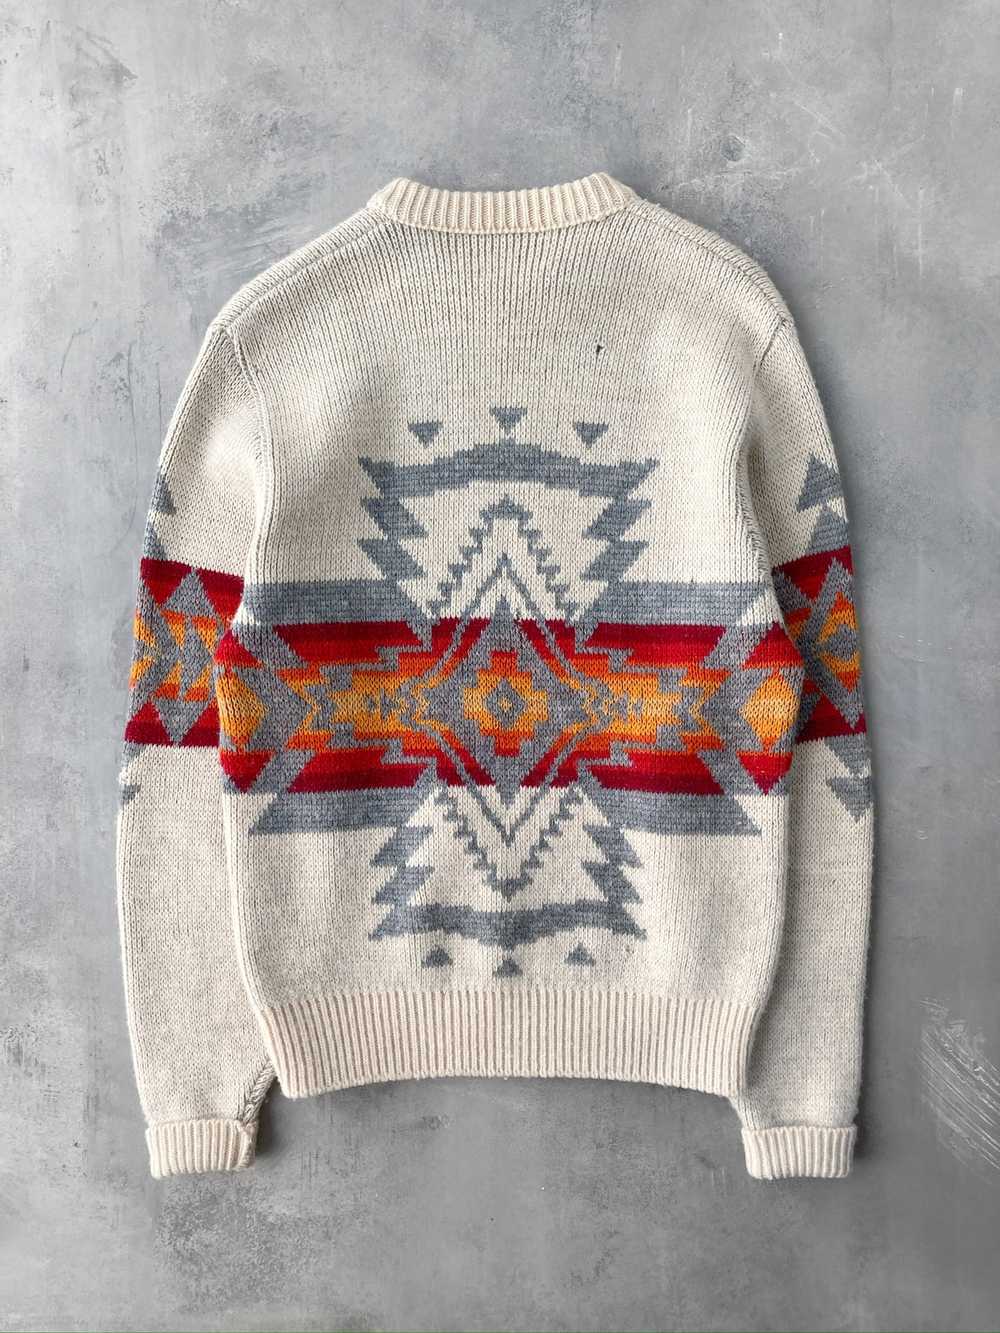 Pendleton Sweater 70's - Small - image 6